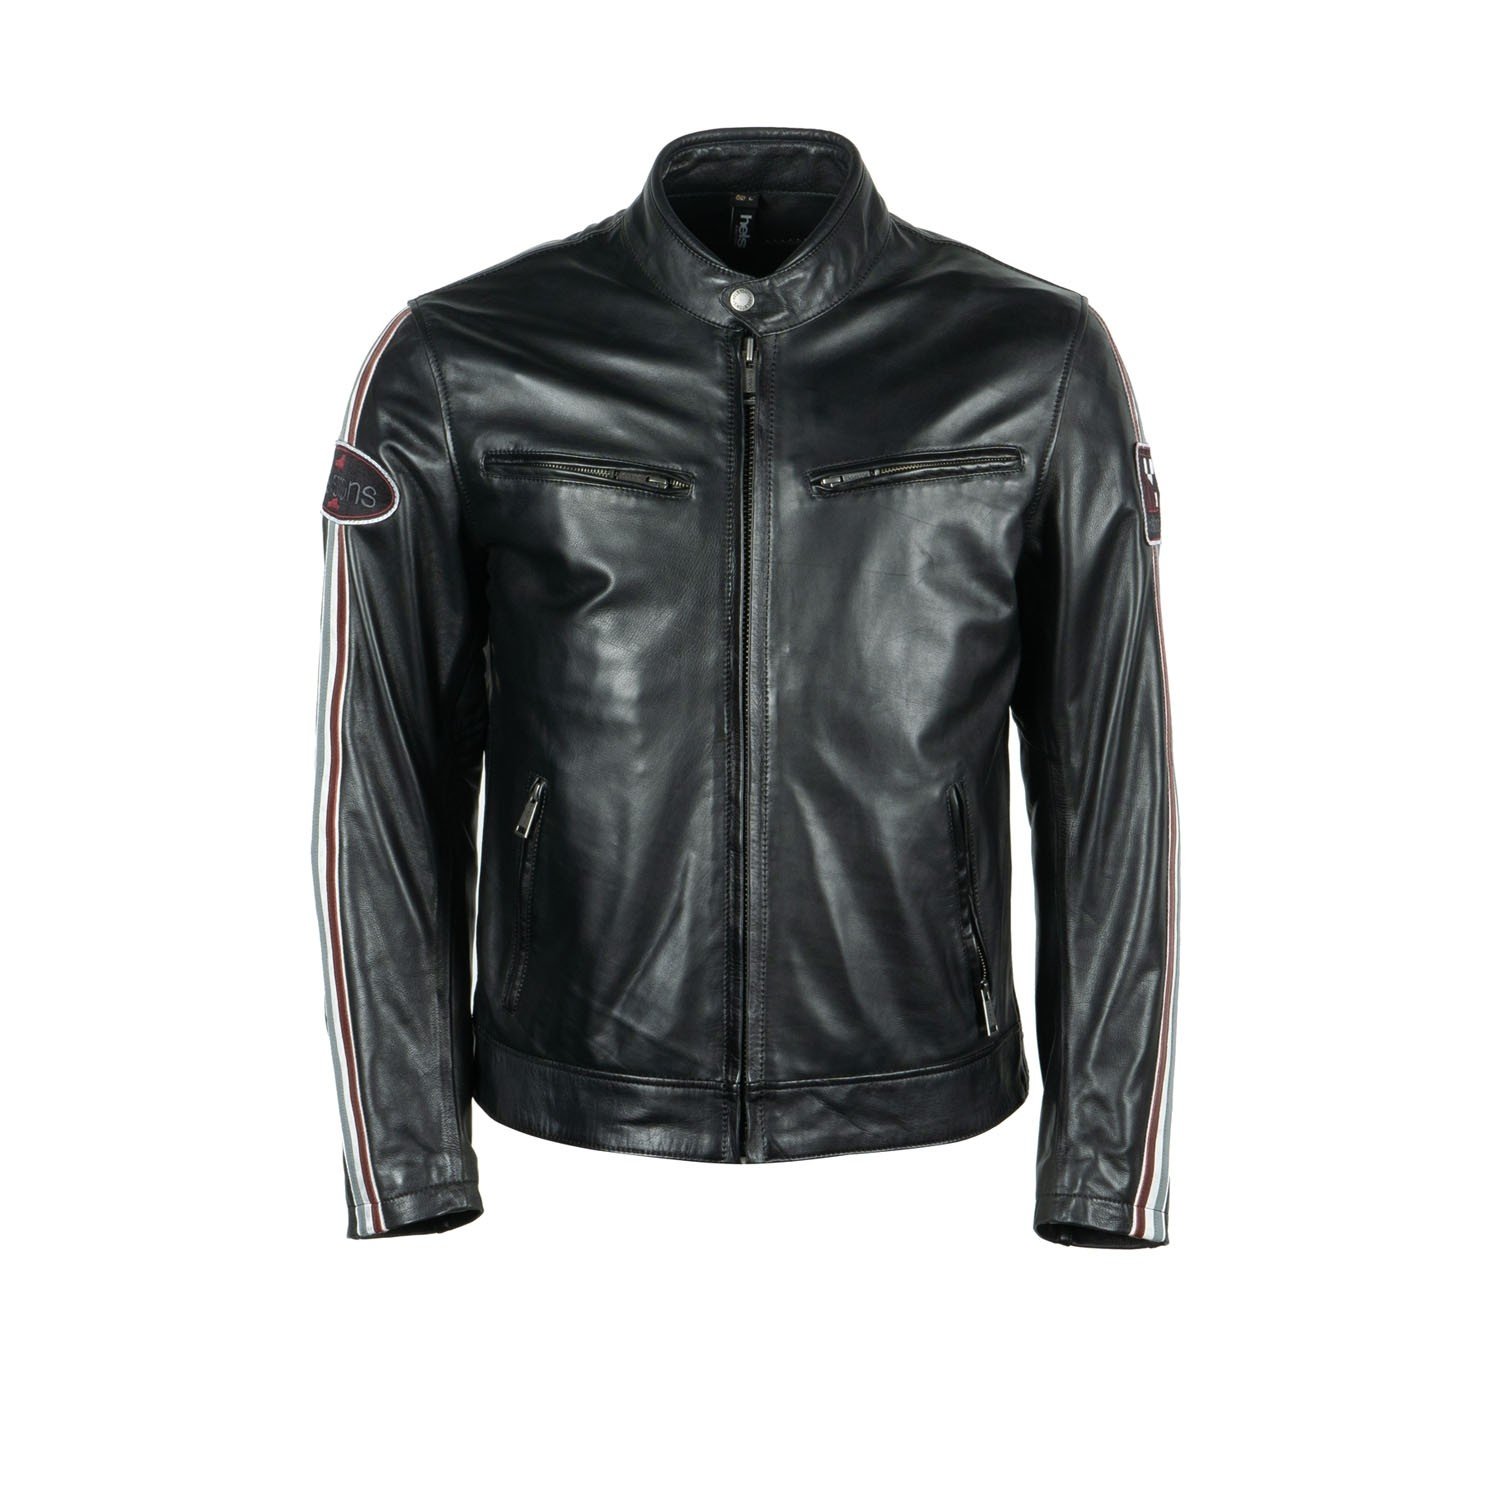 Image of Helstons Race Leather Aniline Jacket Black Size S ID 3662136083110